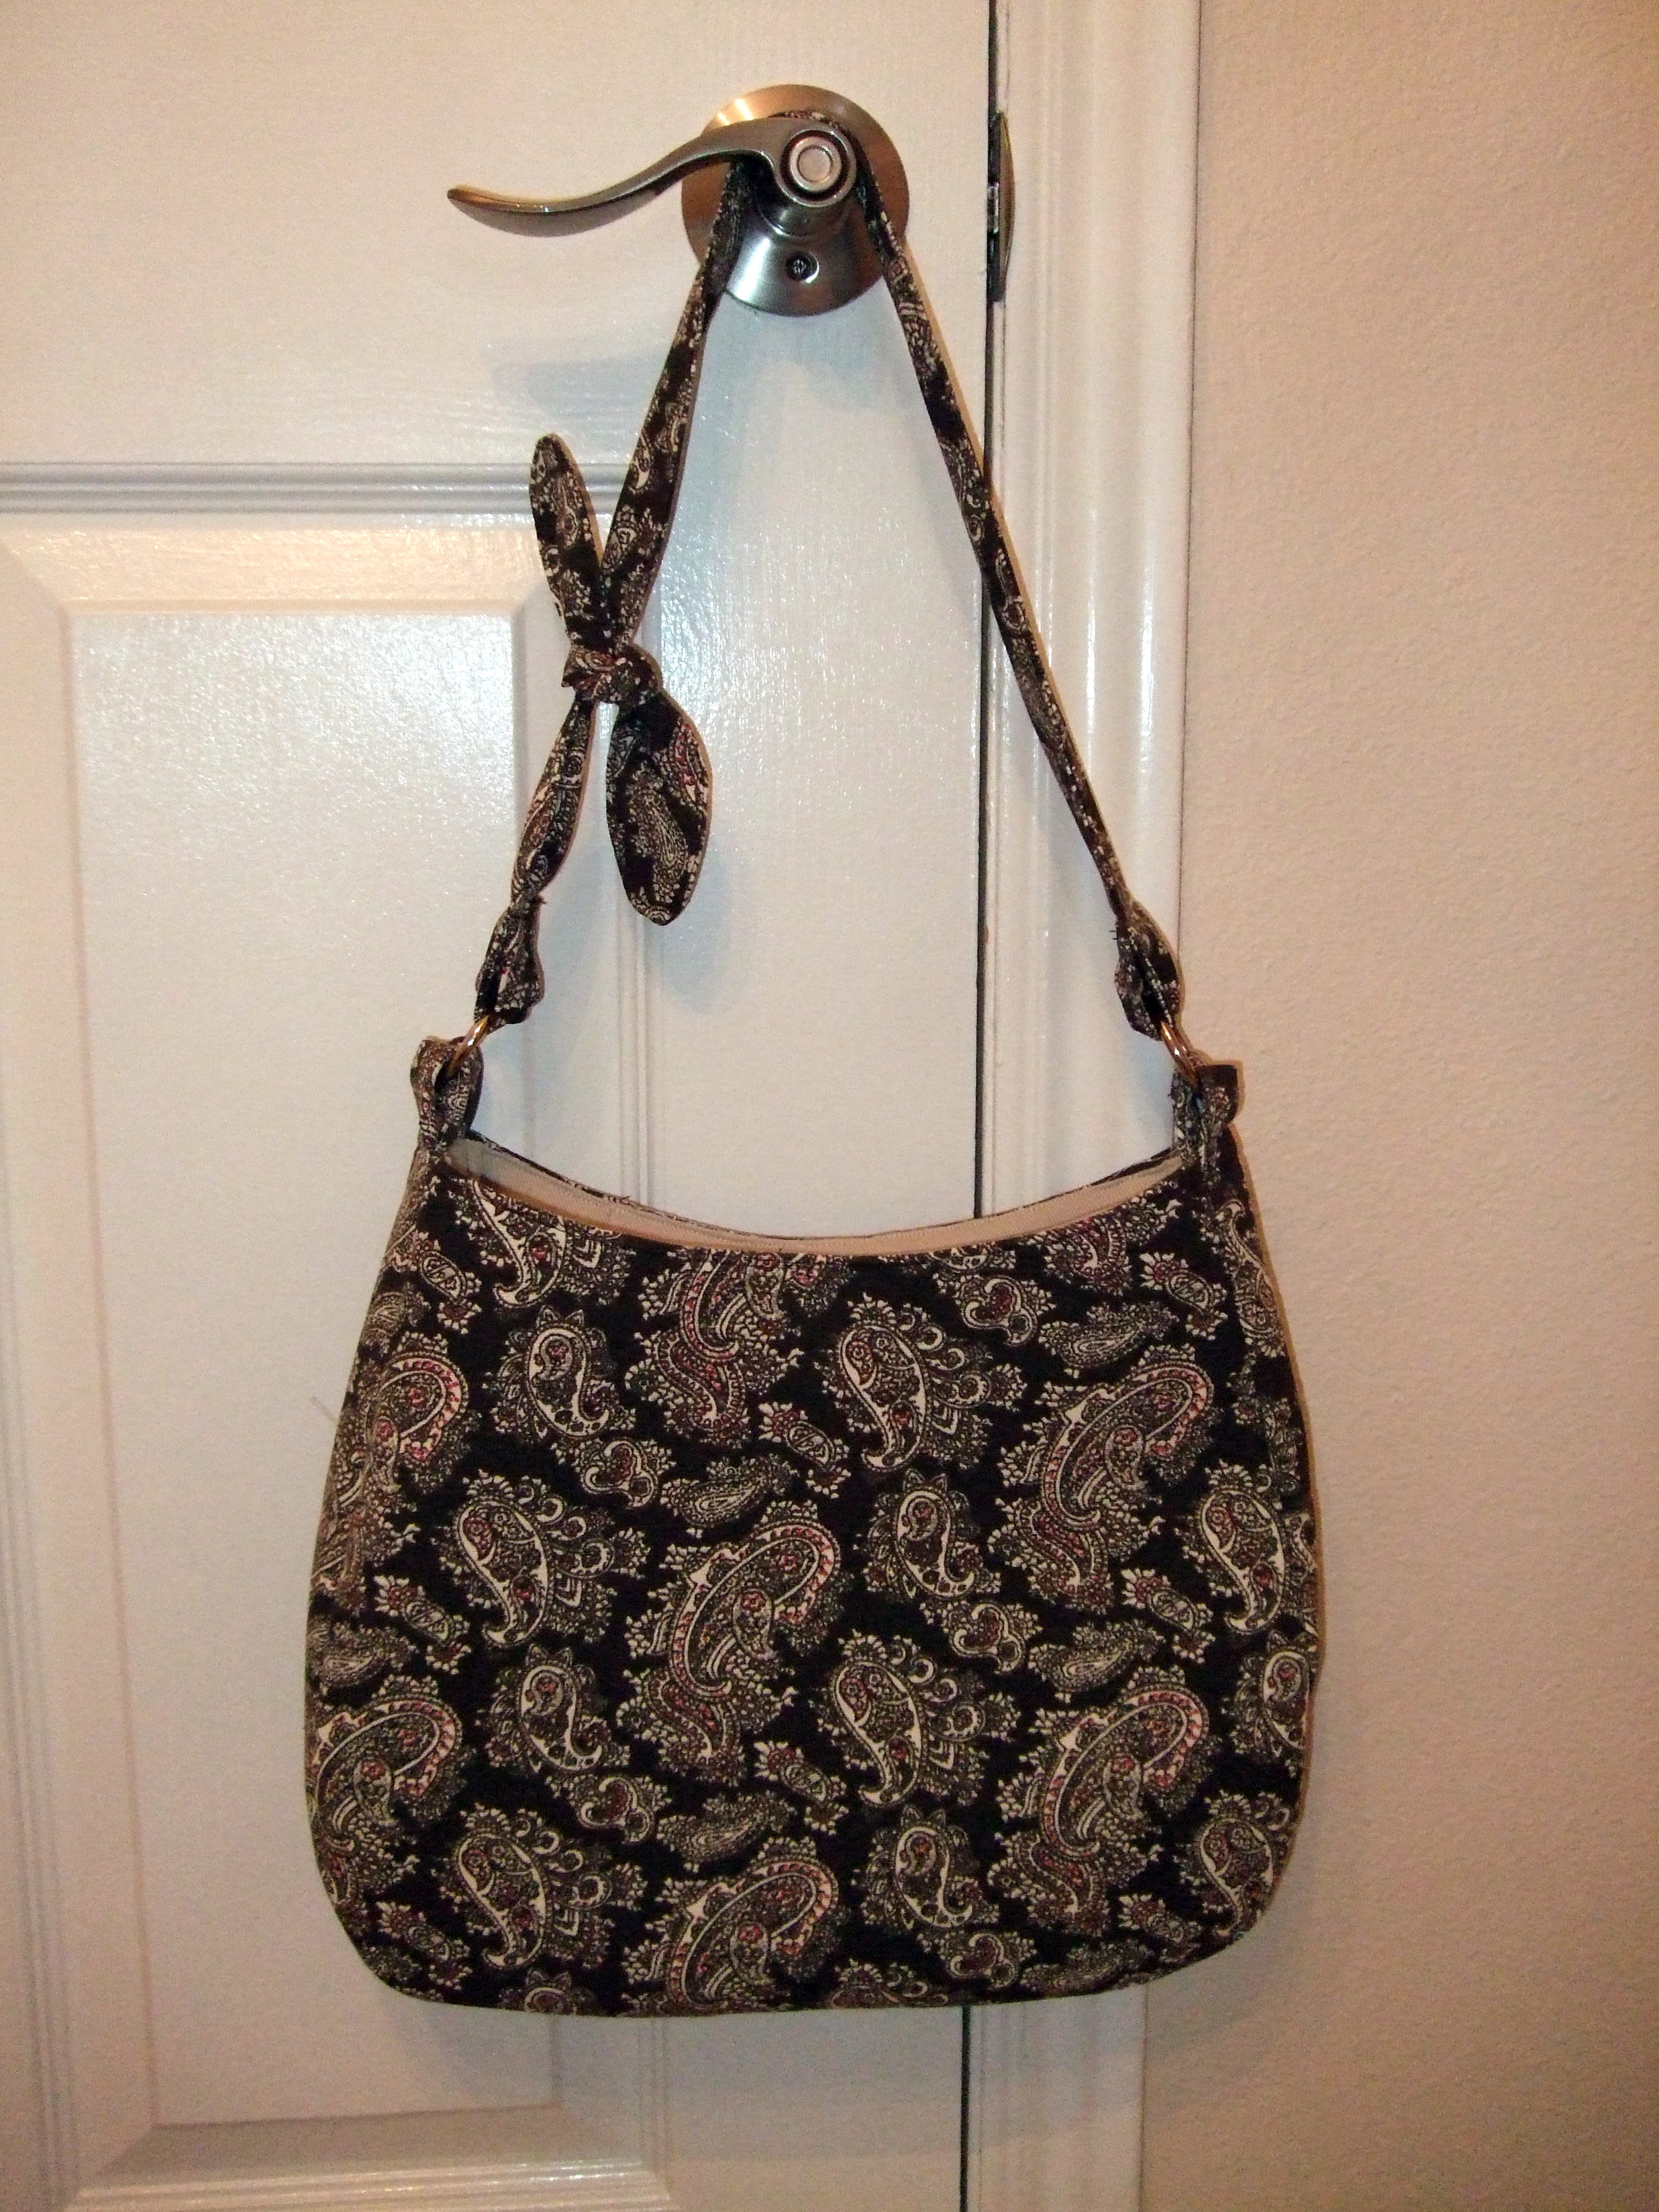 DIY Hobo bag pattern: super easy and versatile - Nana Sews and Crafts